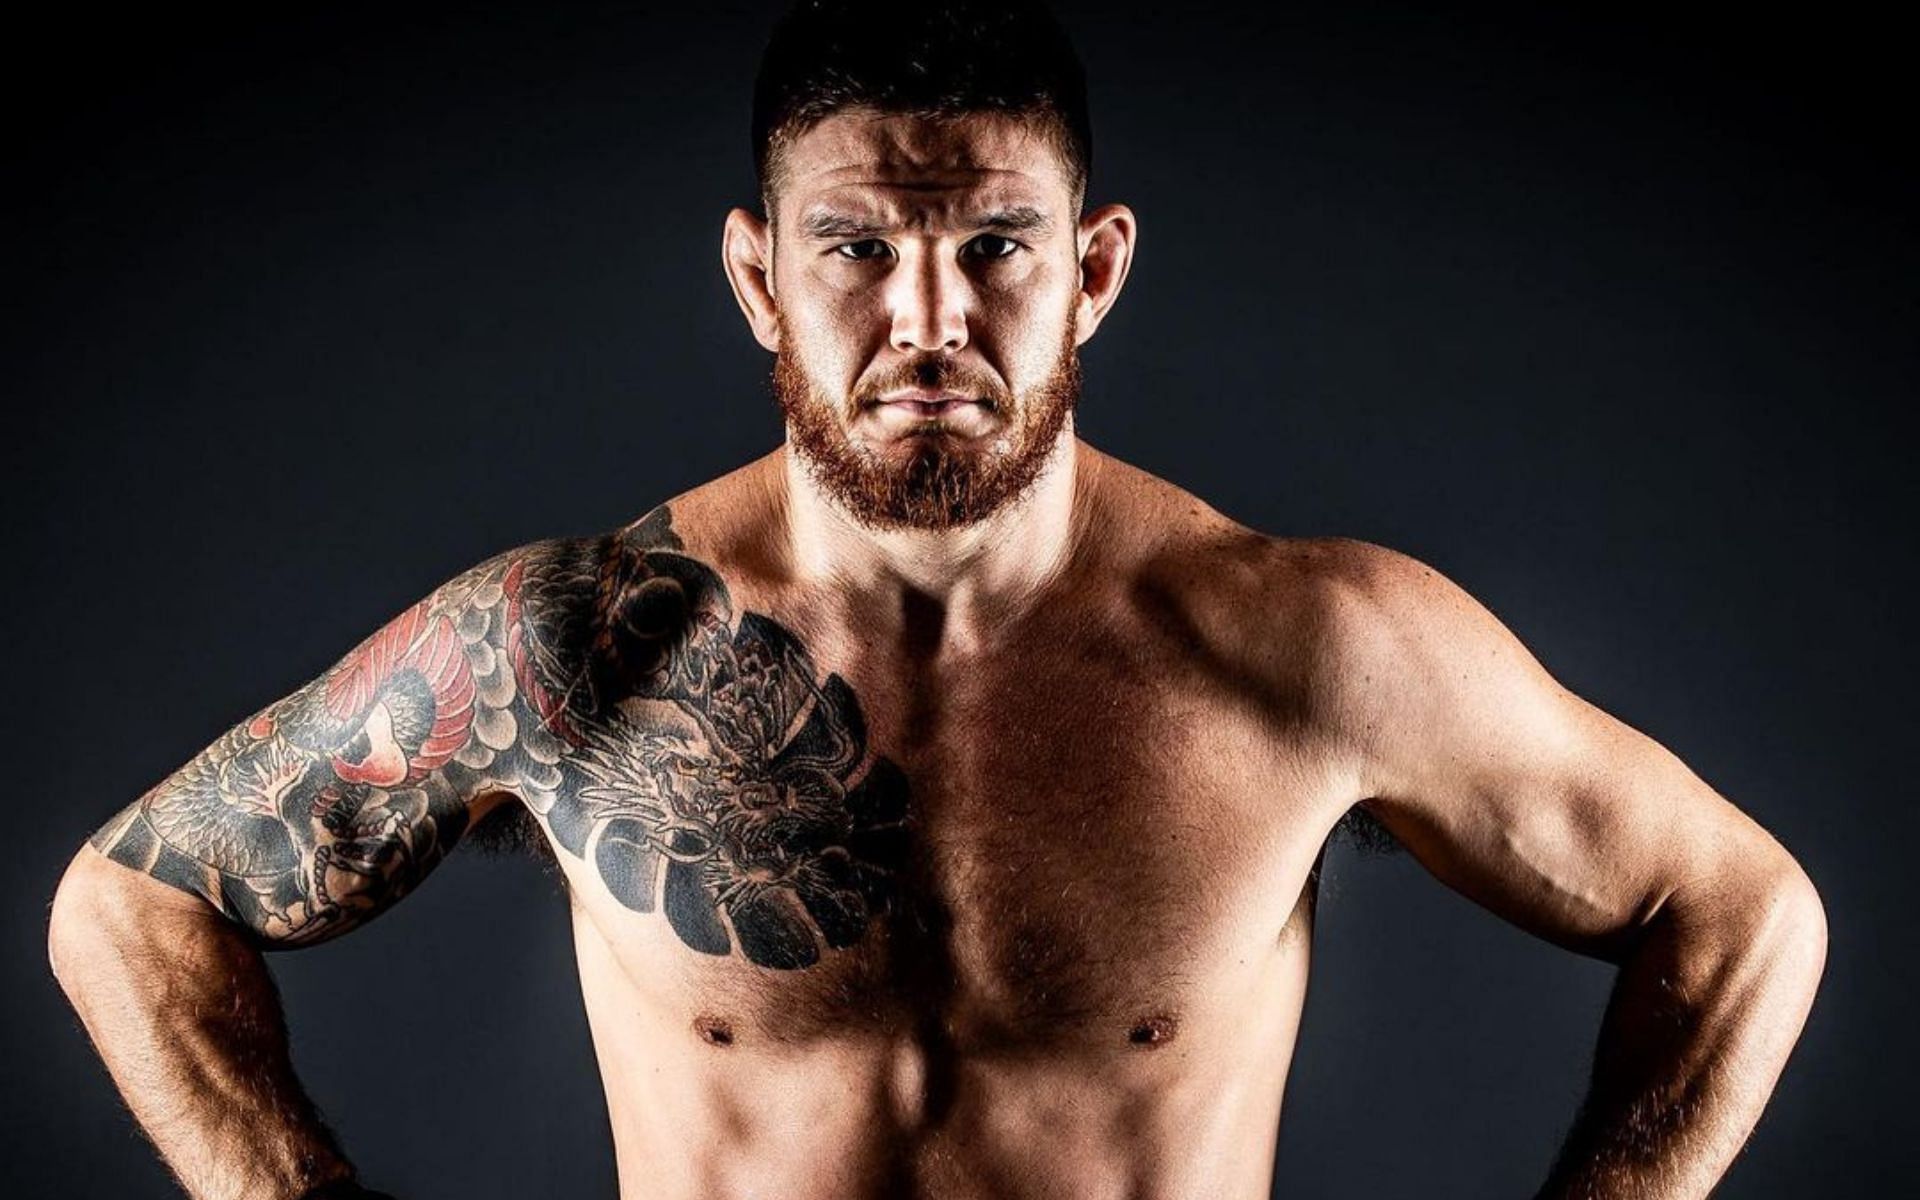 Bellator MMA fighter Johnny Eblen [Image credits: @johnnyeblen on Instagram]